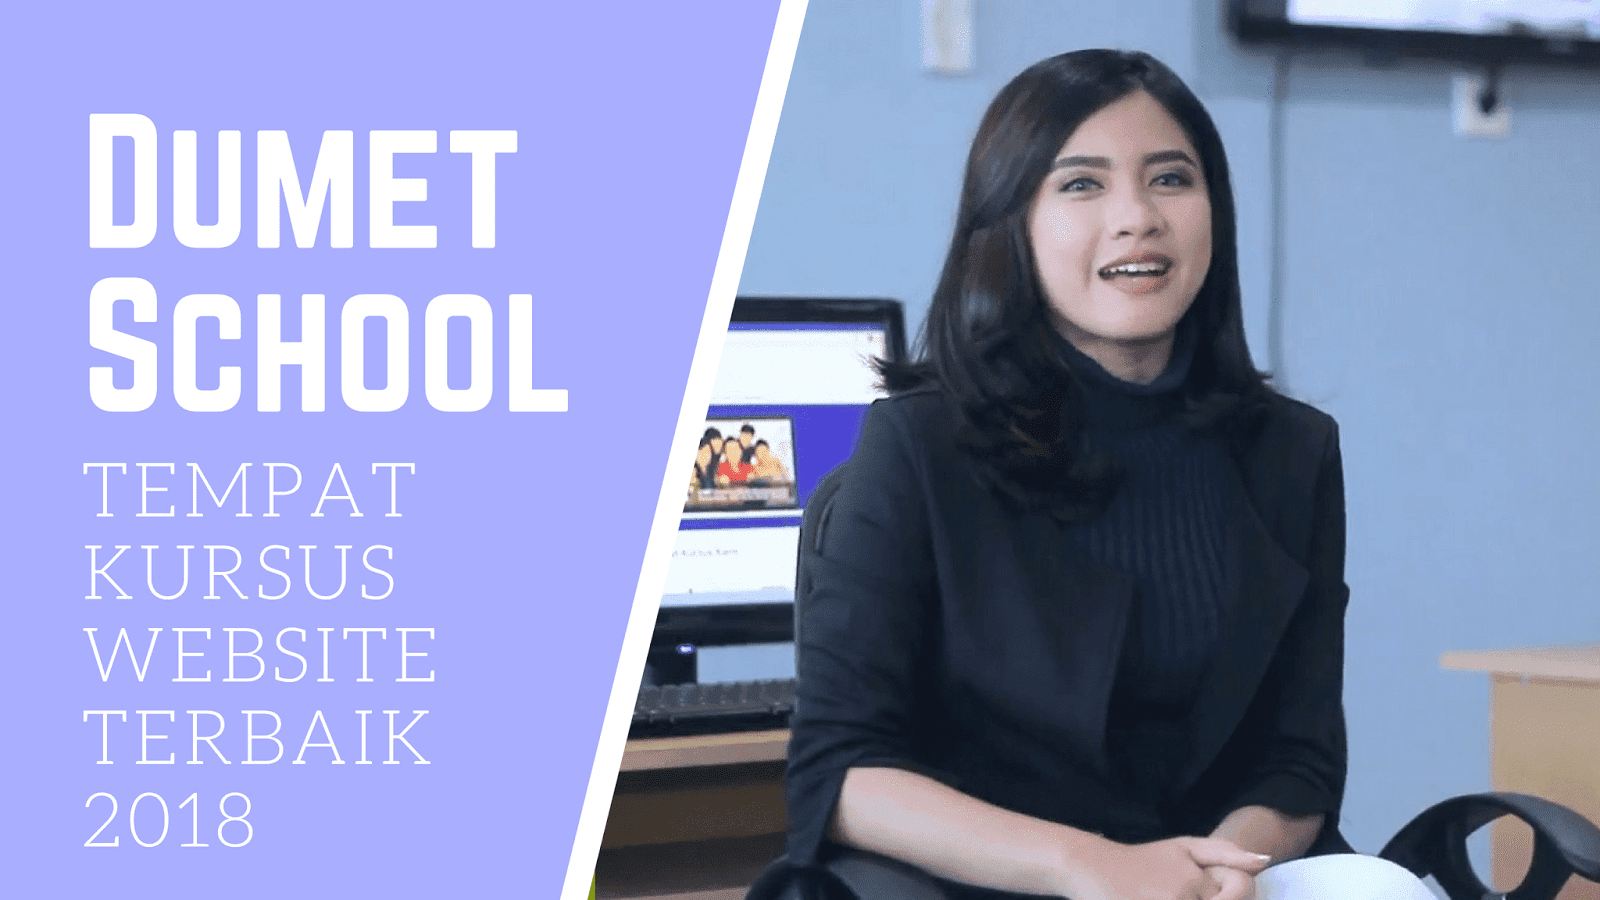 DUMET School Tempat Kursus Website Terbaik 2018